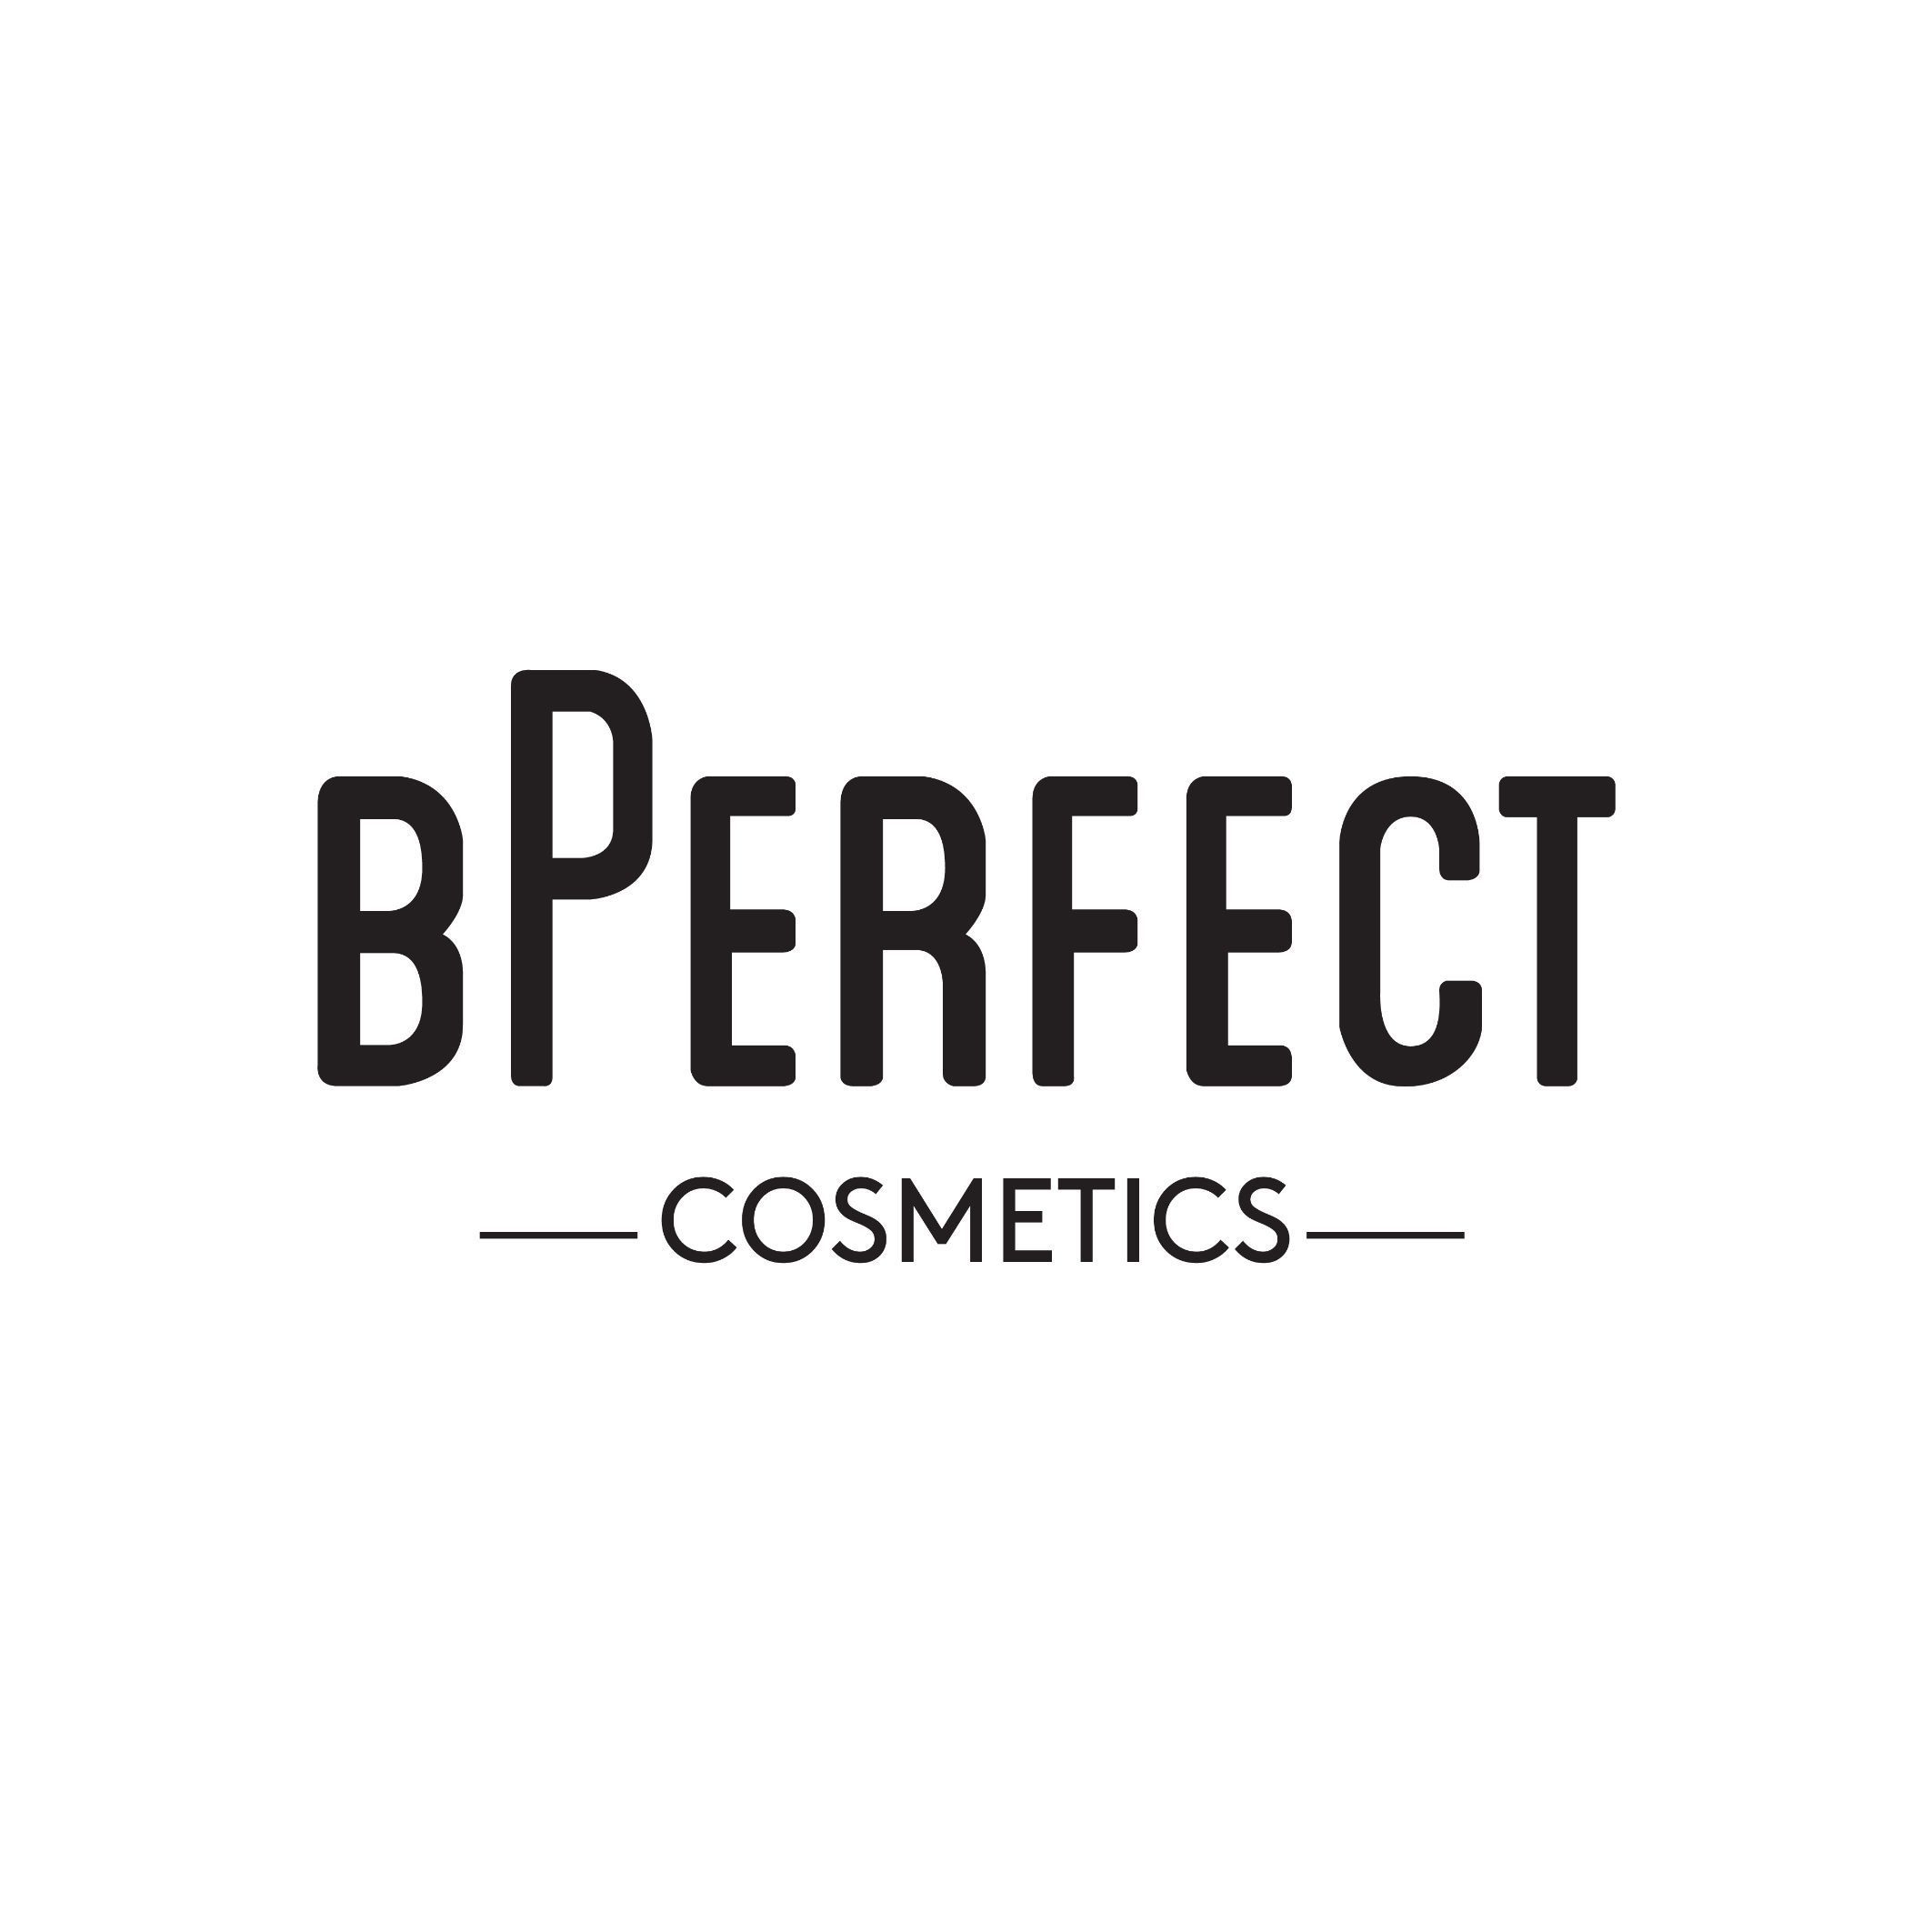 BPerfect Cosmetics Cork, BPerfect Cosmetics, 39 Oliver Plunkett Street, Centre, Cork